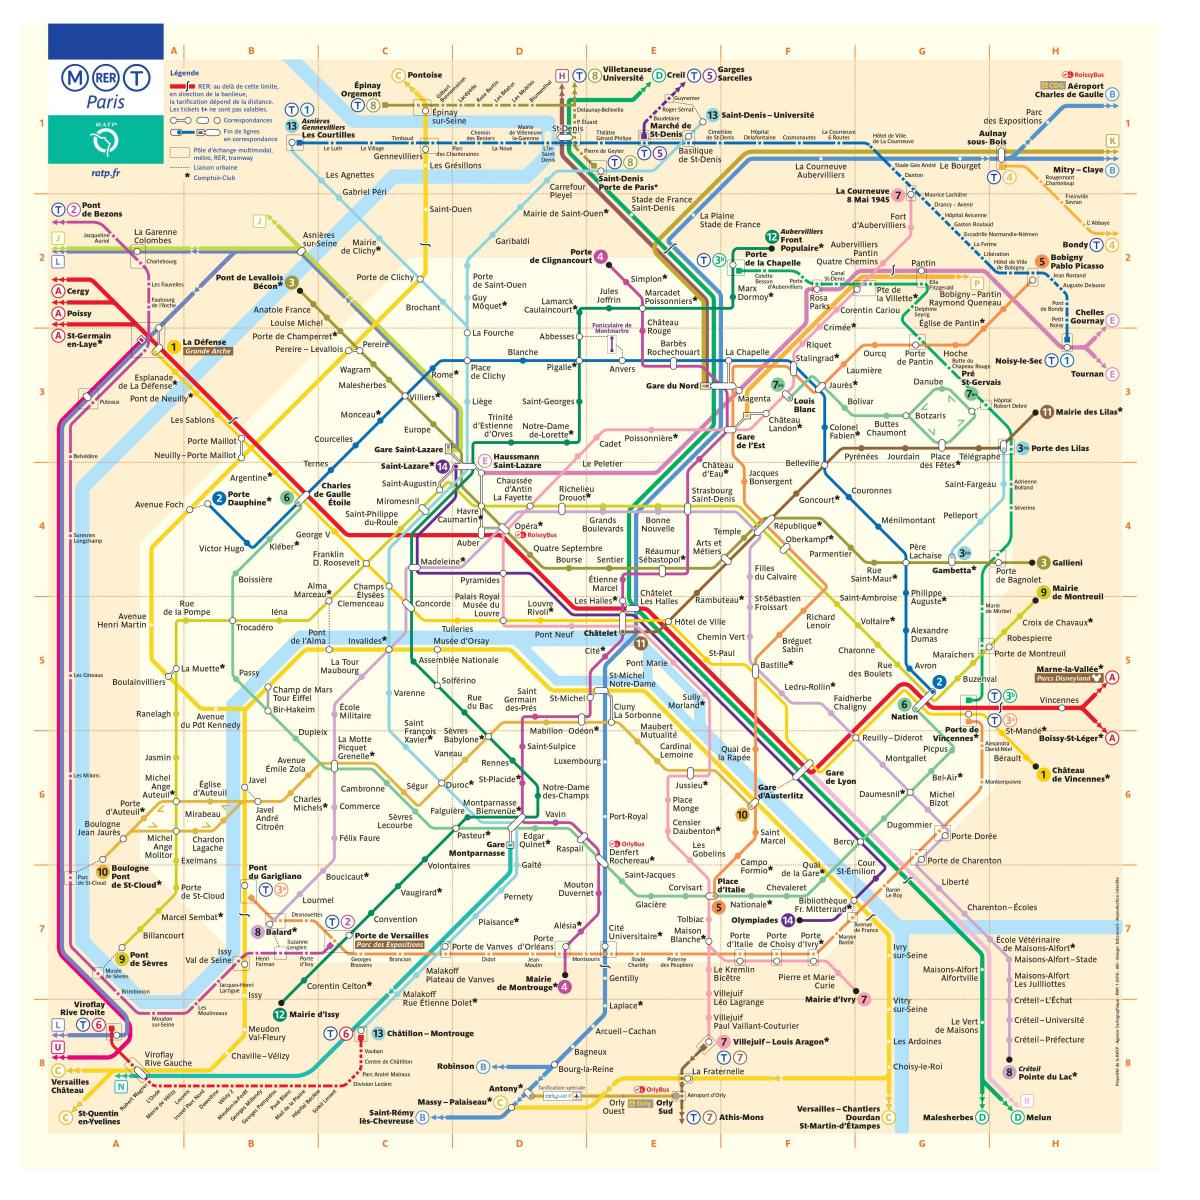 Karta za Pariz metro